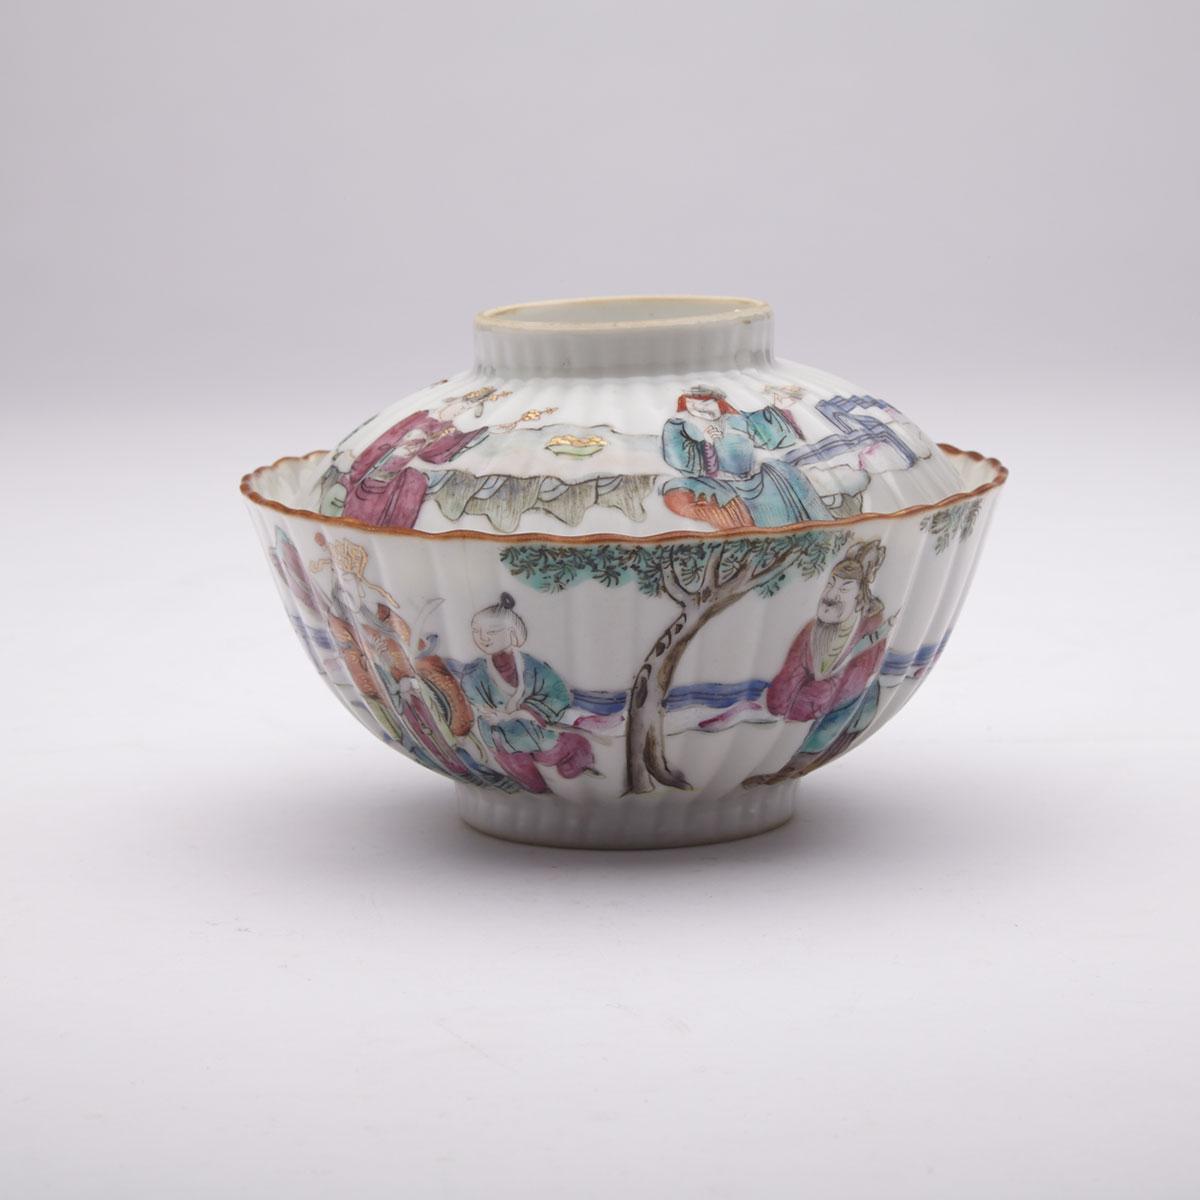 Famille Rose ‘Fu Lu Shou’ Bowl and Cover, Tongzhi Mark and Period (1862-1874)